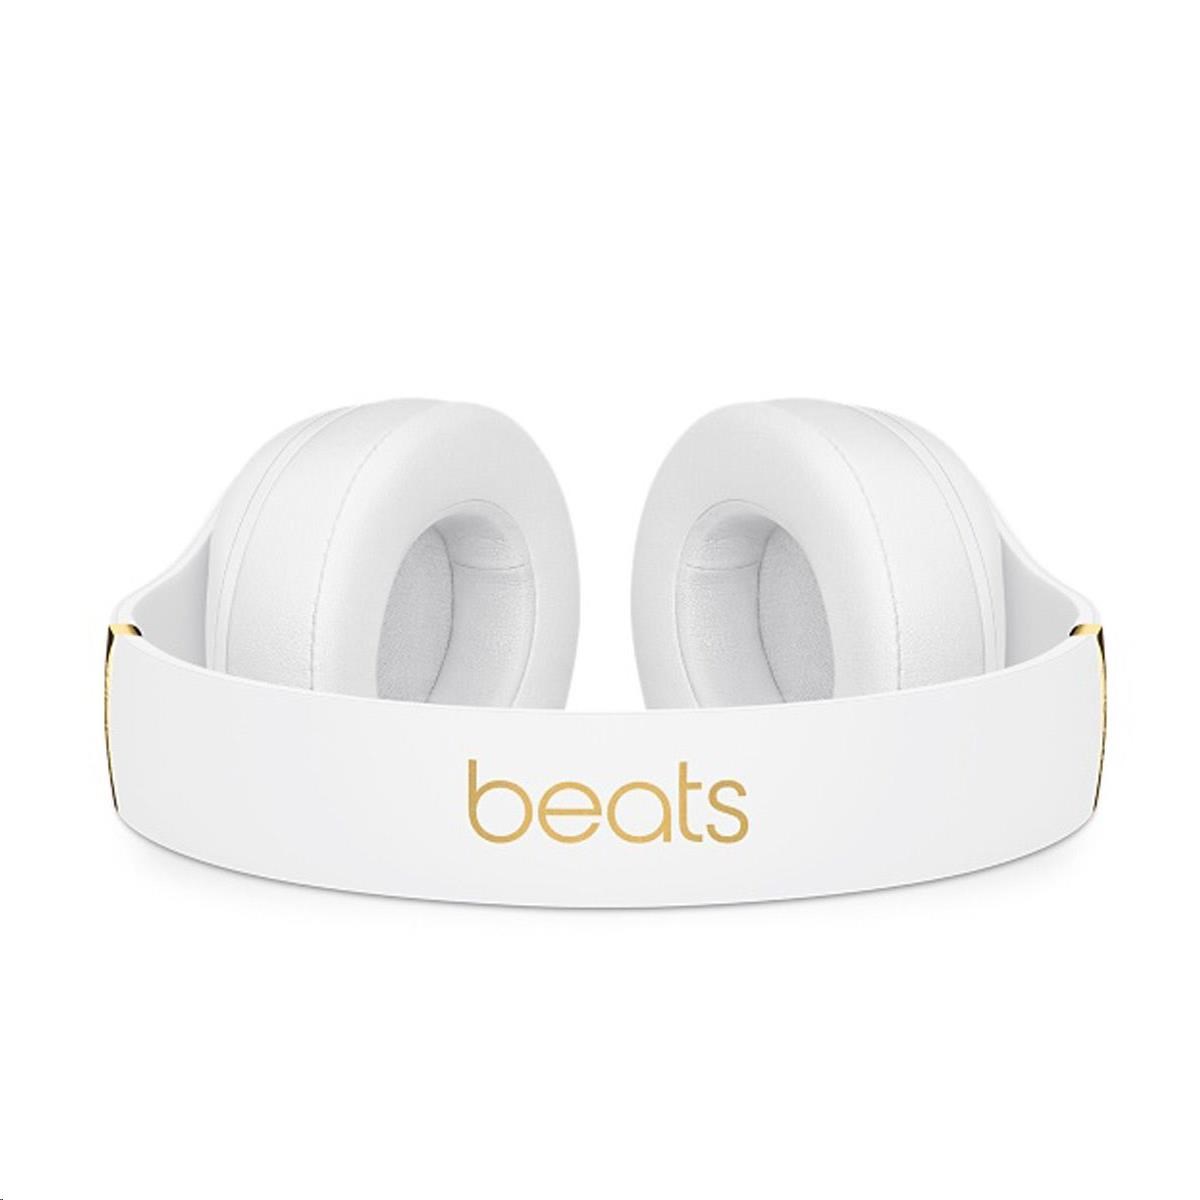 Beats Studio3 Wireless Over-Ear Headphones - White1 